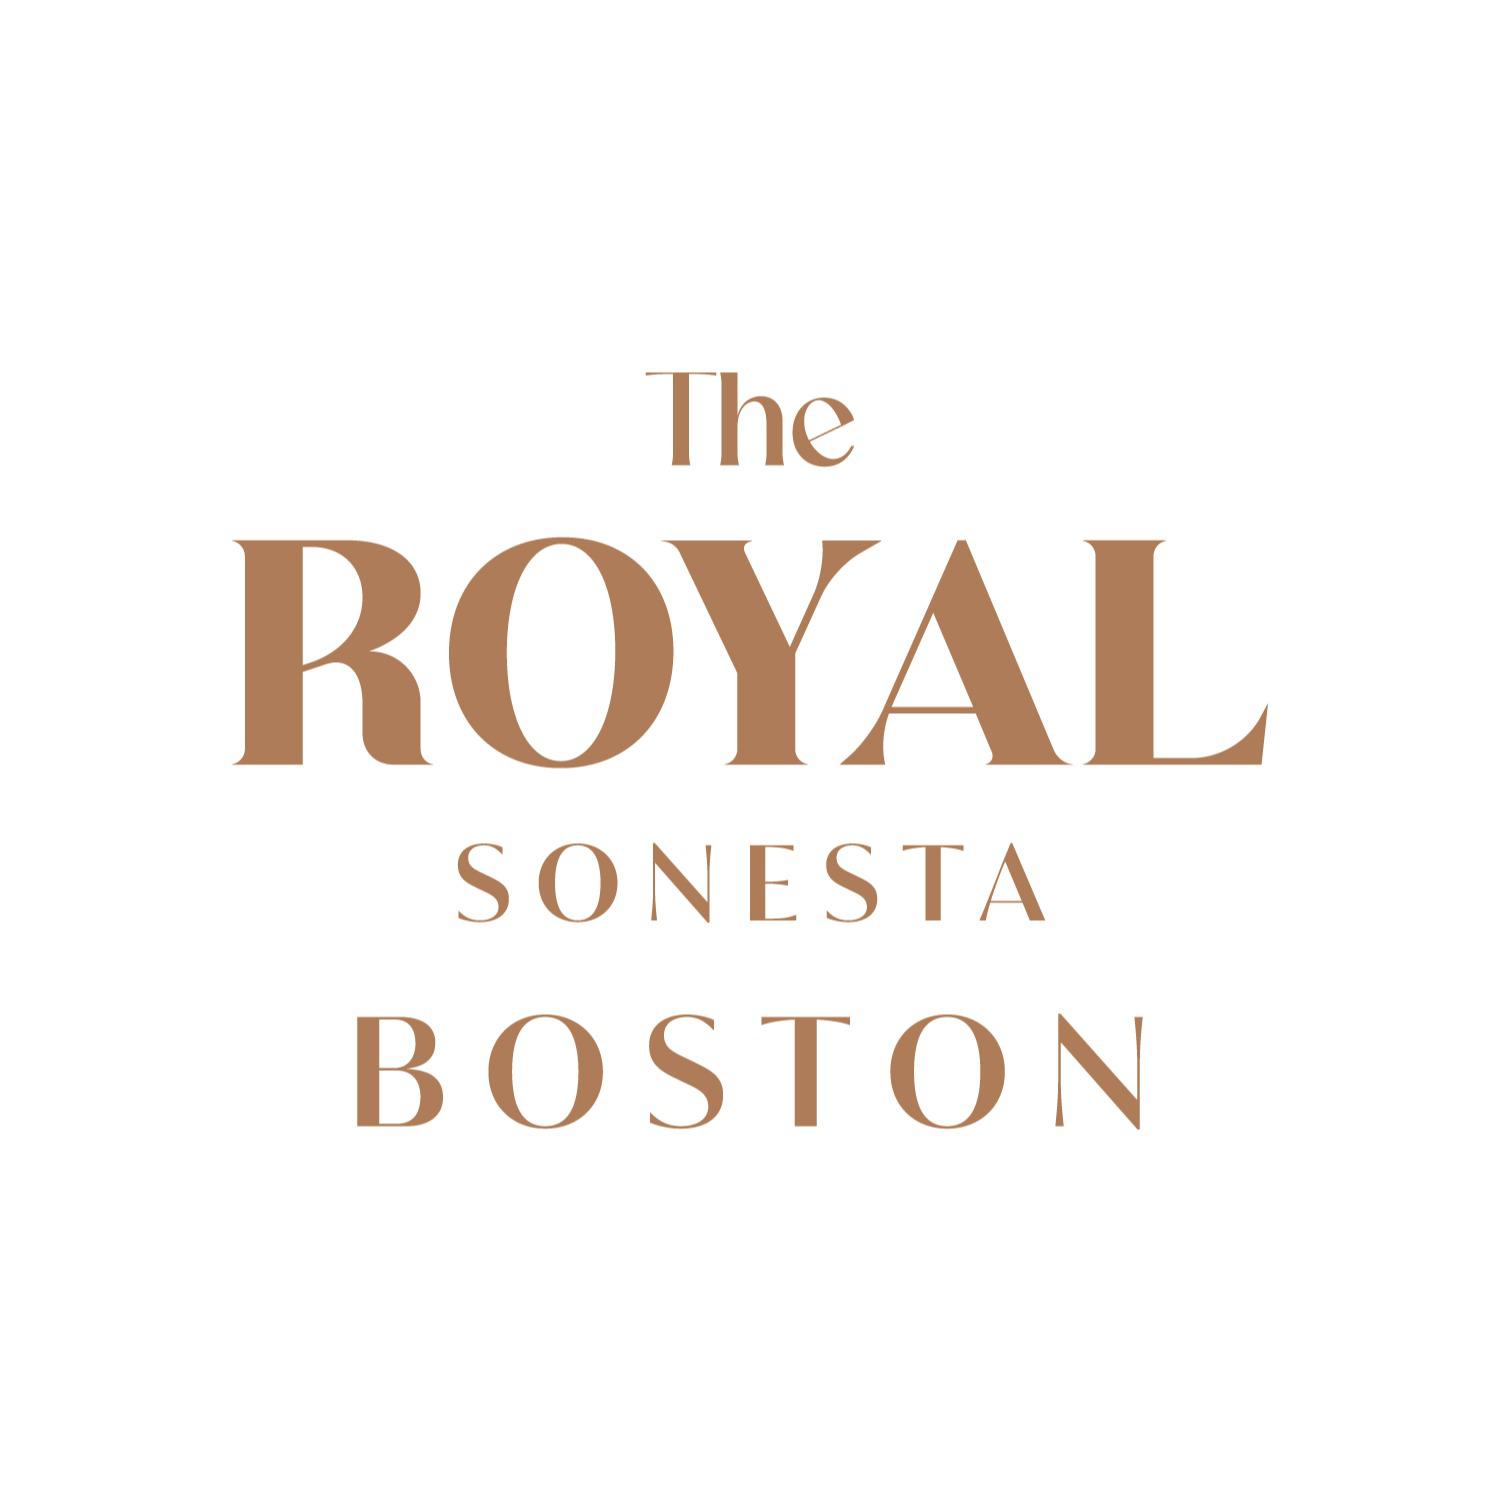 The Royal Sonesta Boston